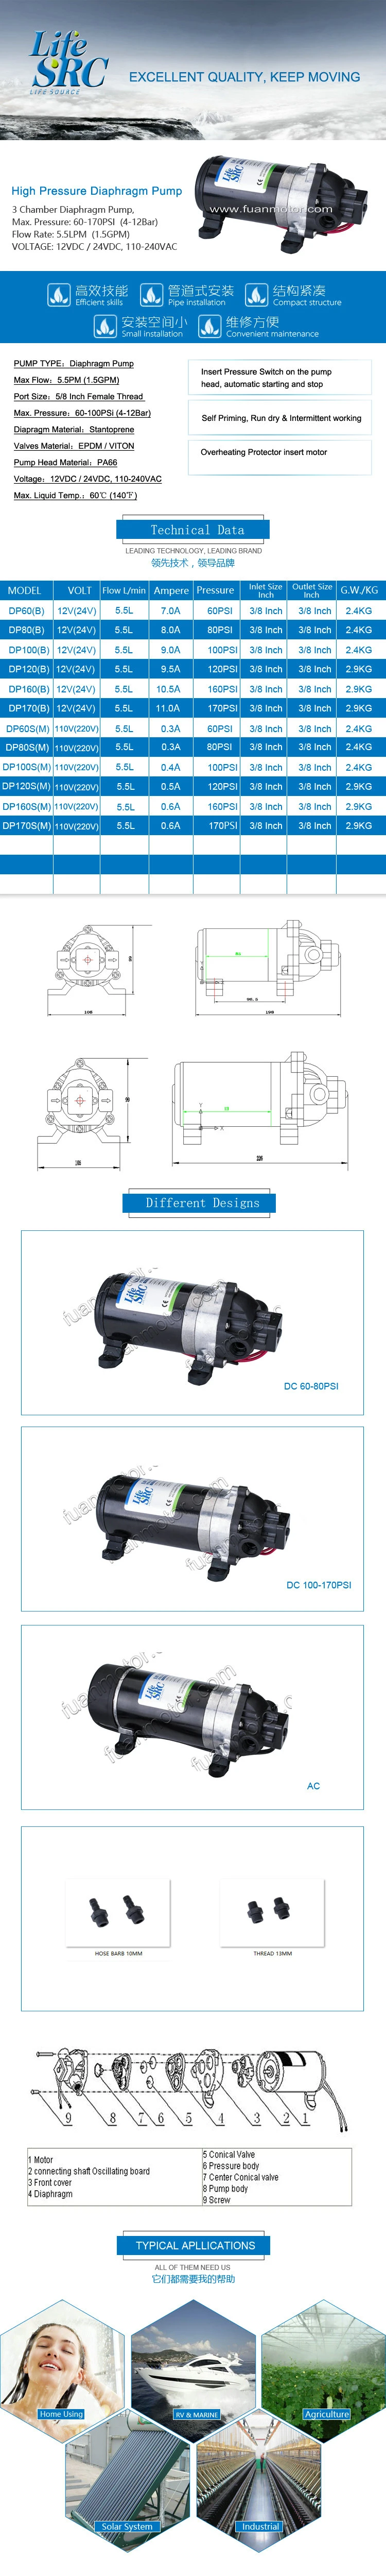 Lifesrc 80psi Water Filter Pump/ Propump (5L/MIN, 3/8